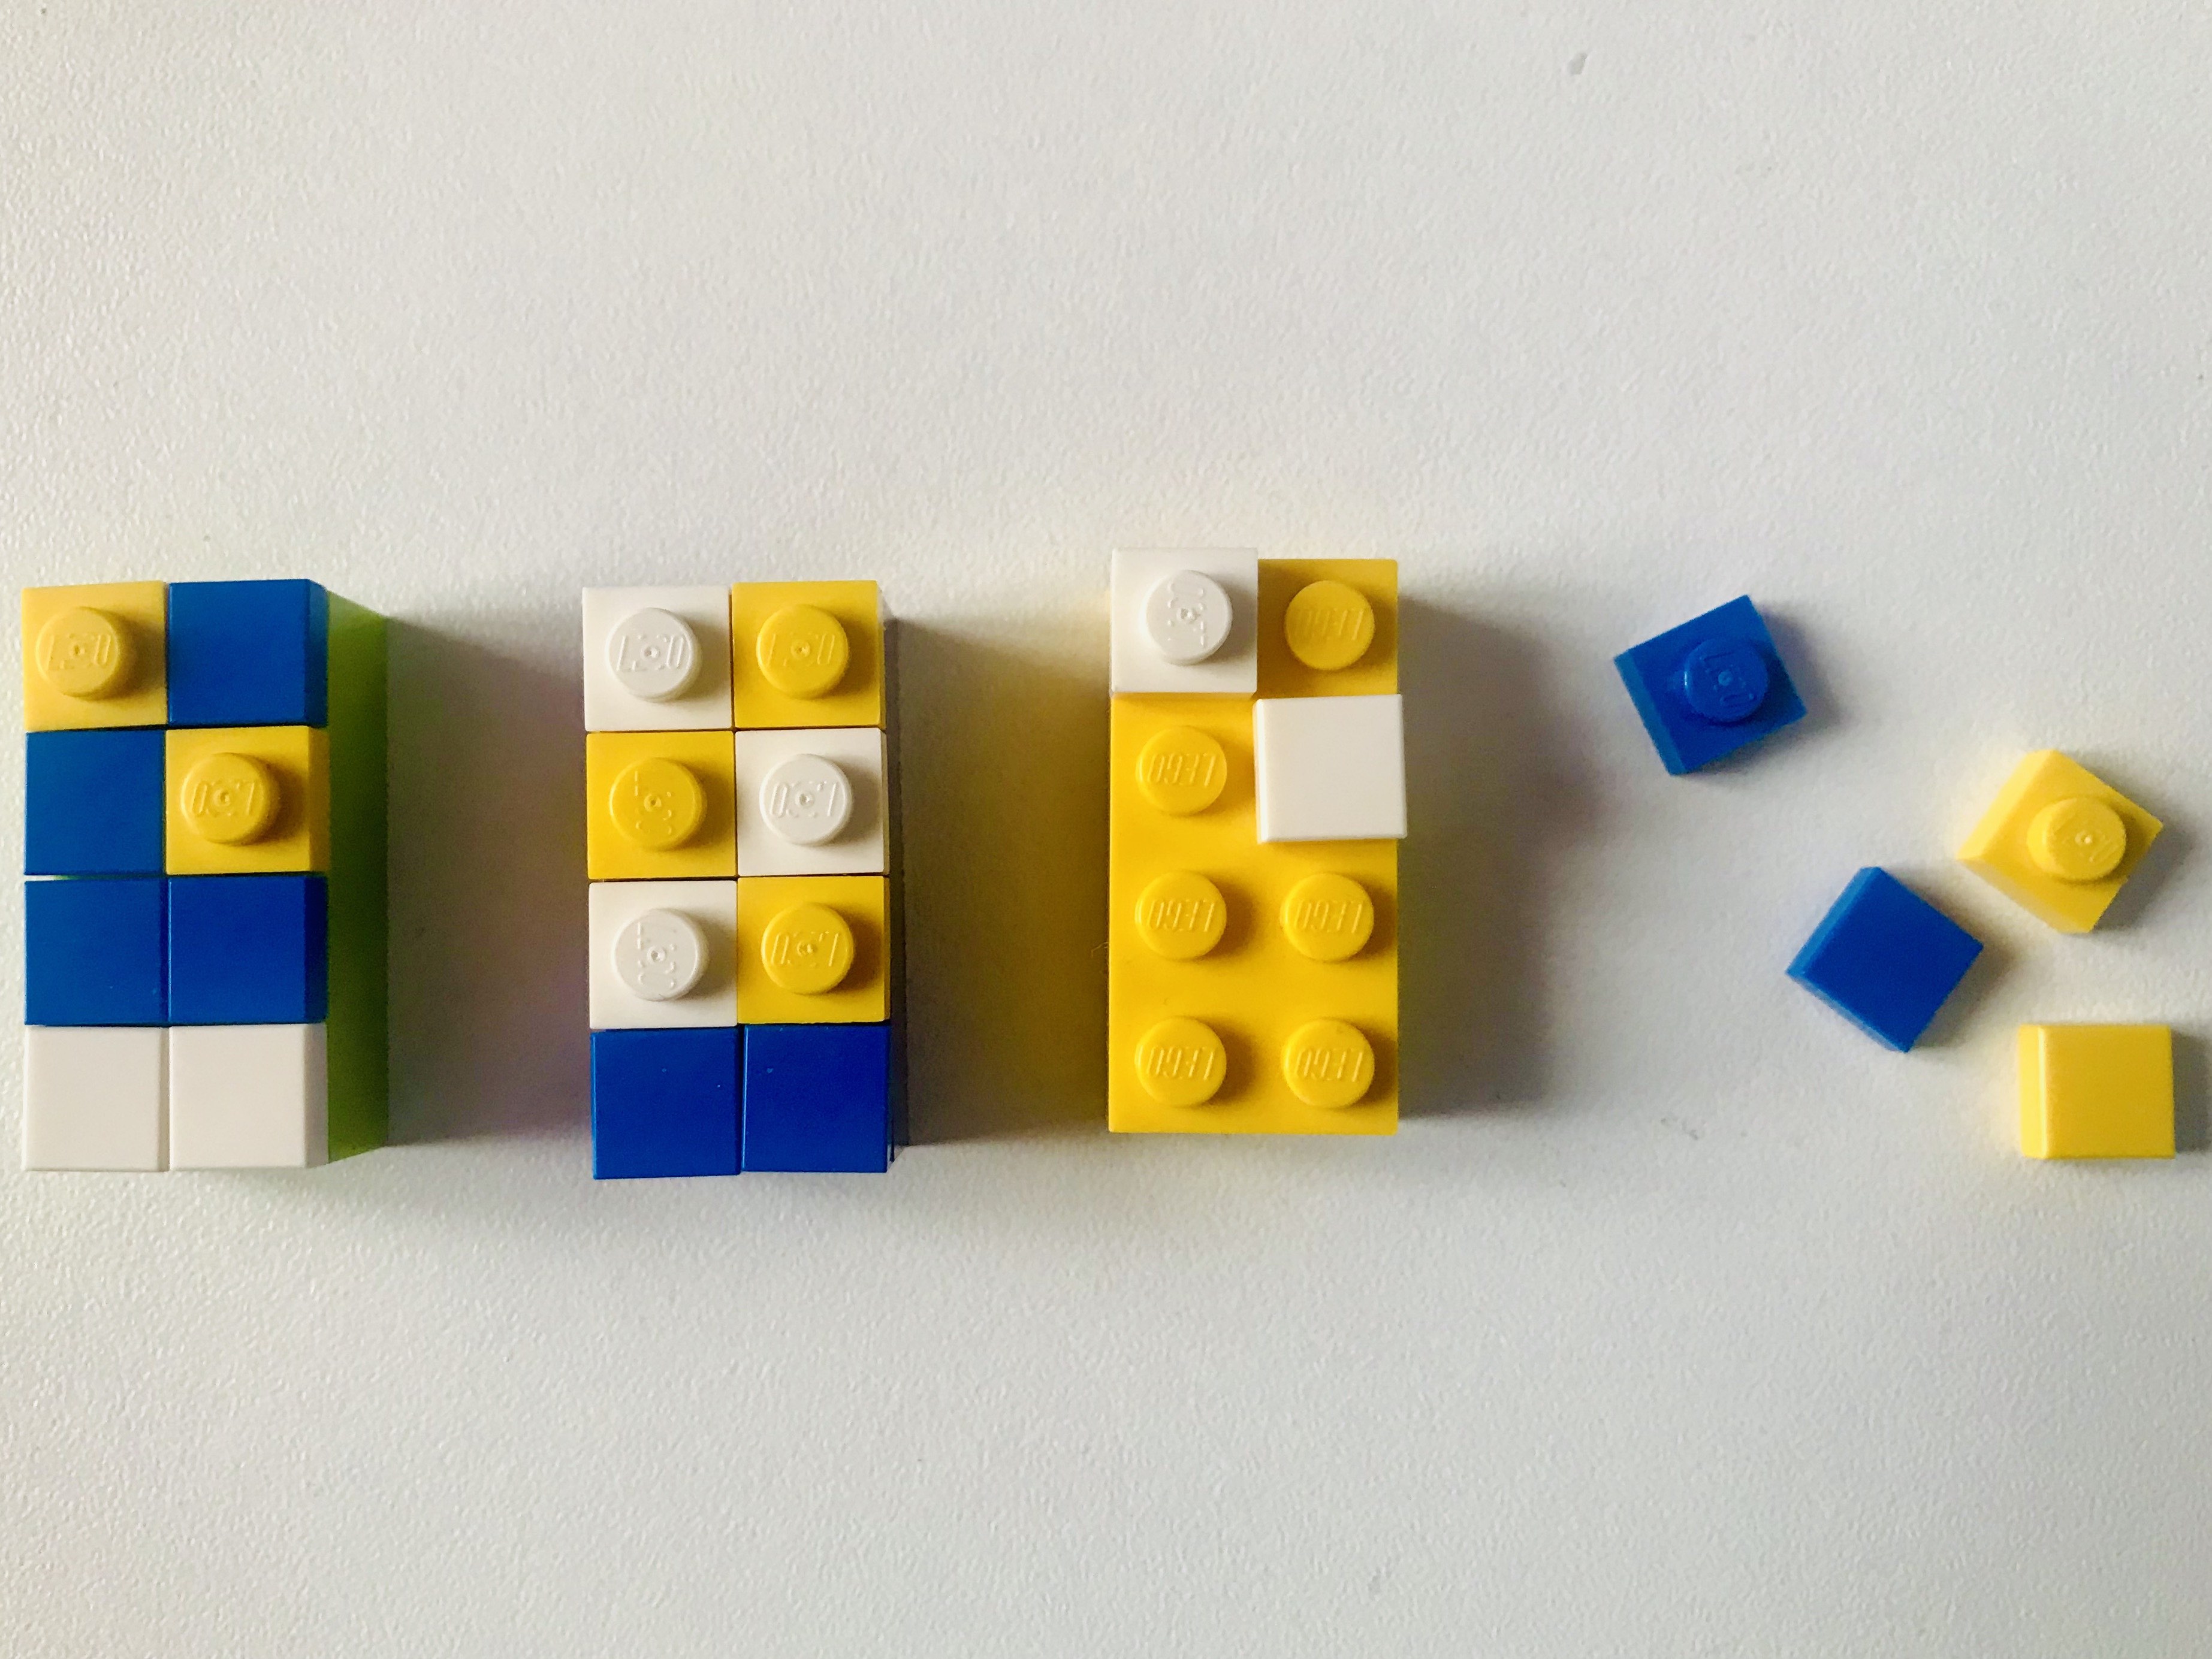 Small tiles to make new Lego Braille Bricks.